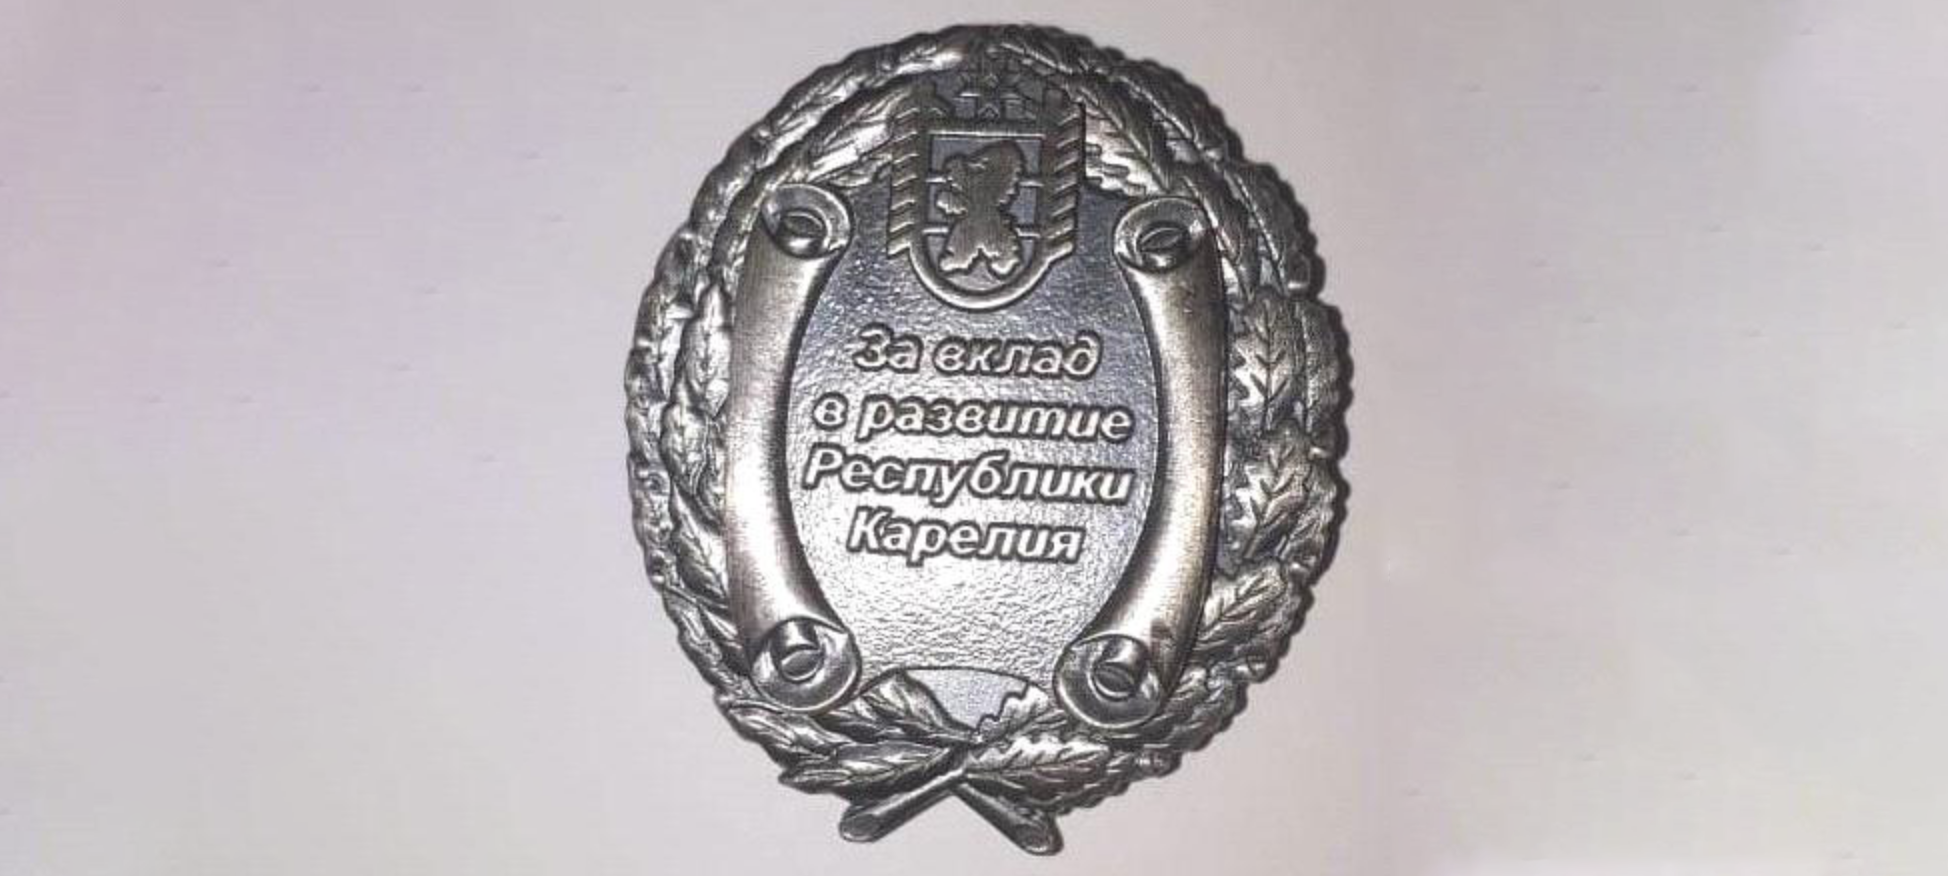 Парфенчиков наградил митрополита Константина почетным знаком "За вклад в развитие Республики Карелия"